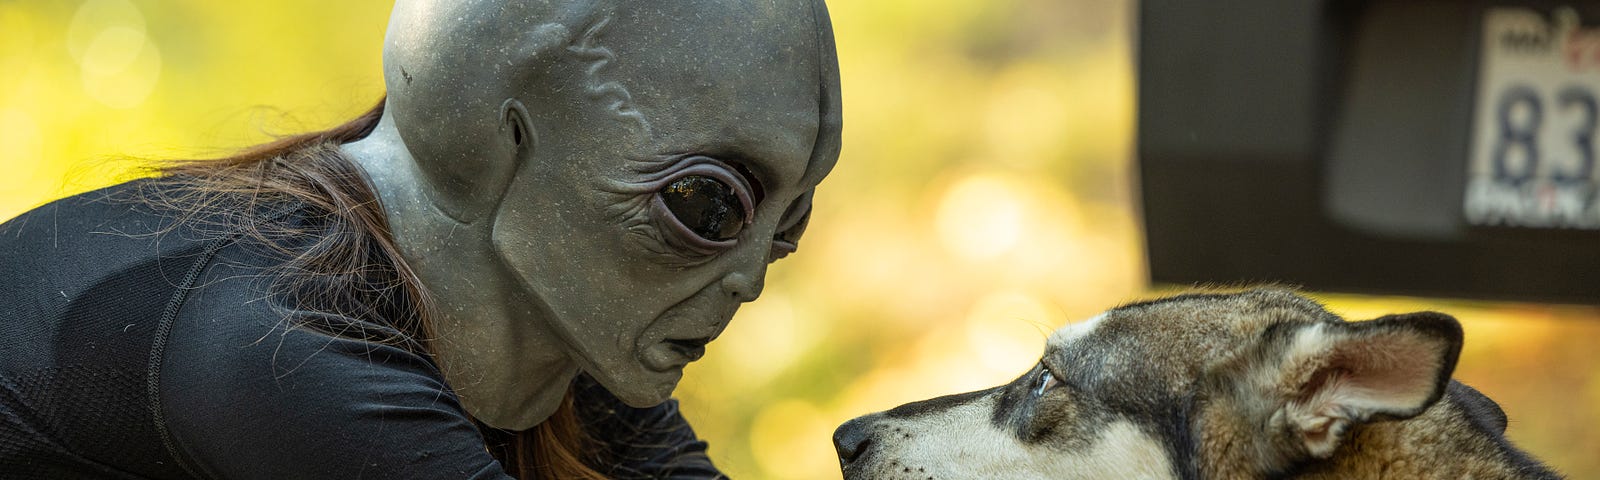 alien with good boy